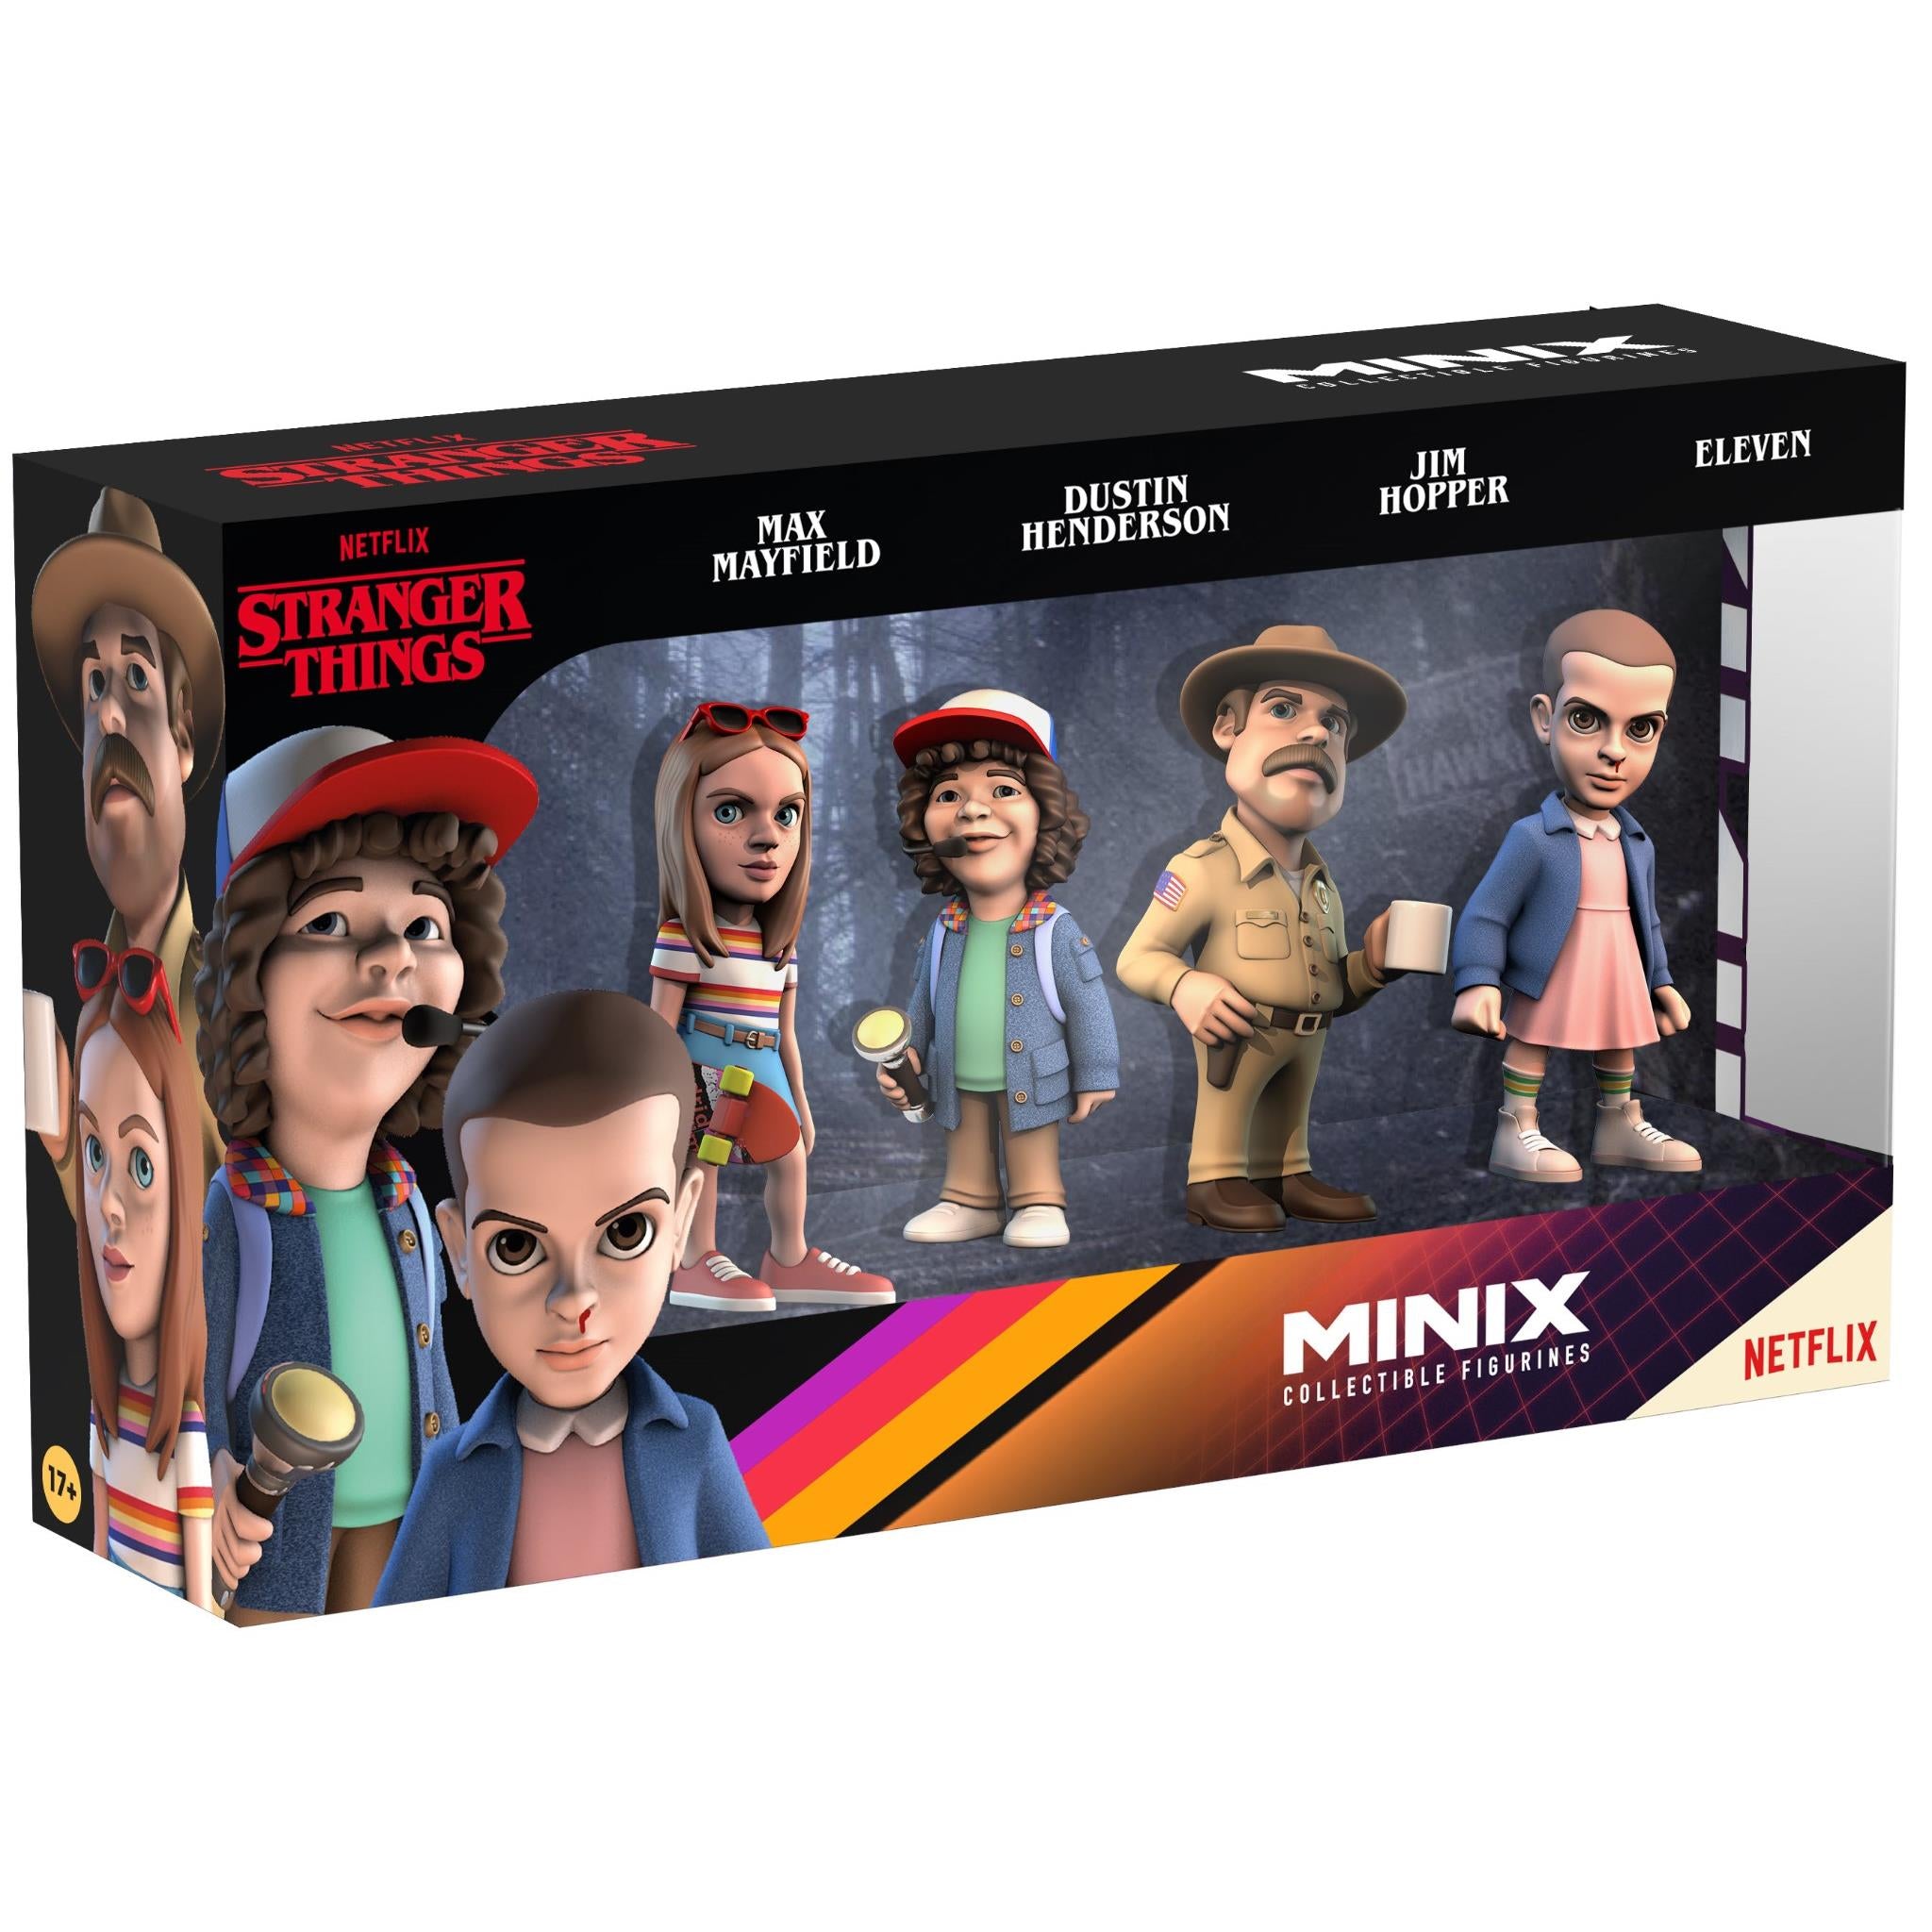 MINIX Collectible Figurine 4 Pack (Stranger Things) - JB Hi-Fi NZ